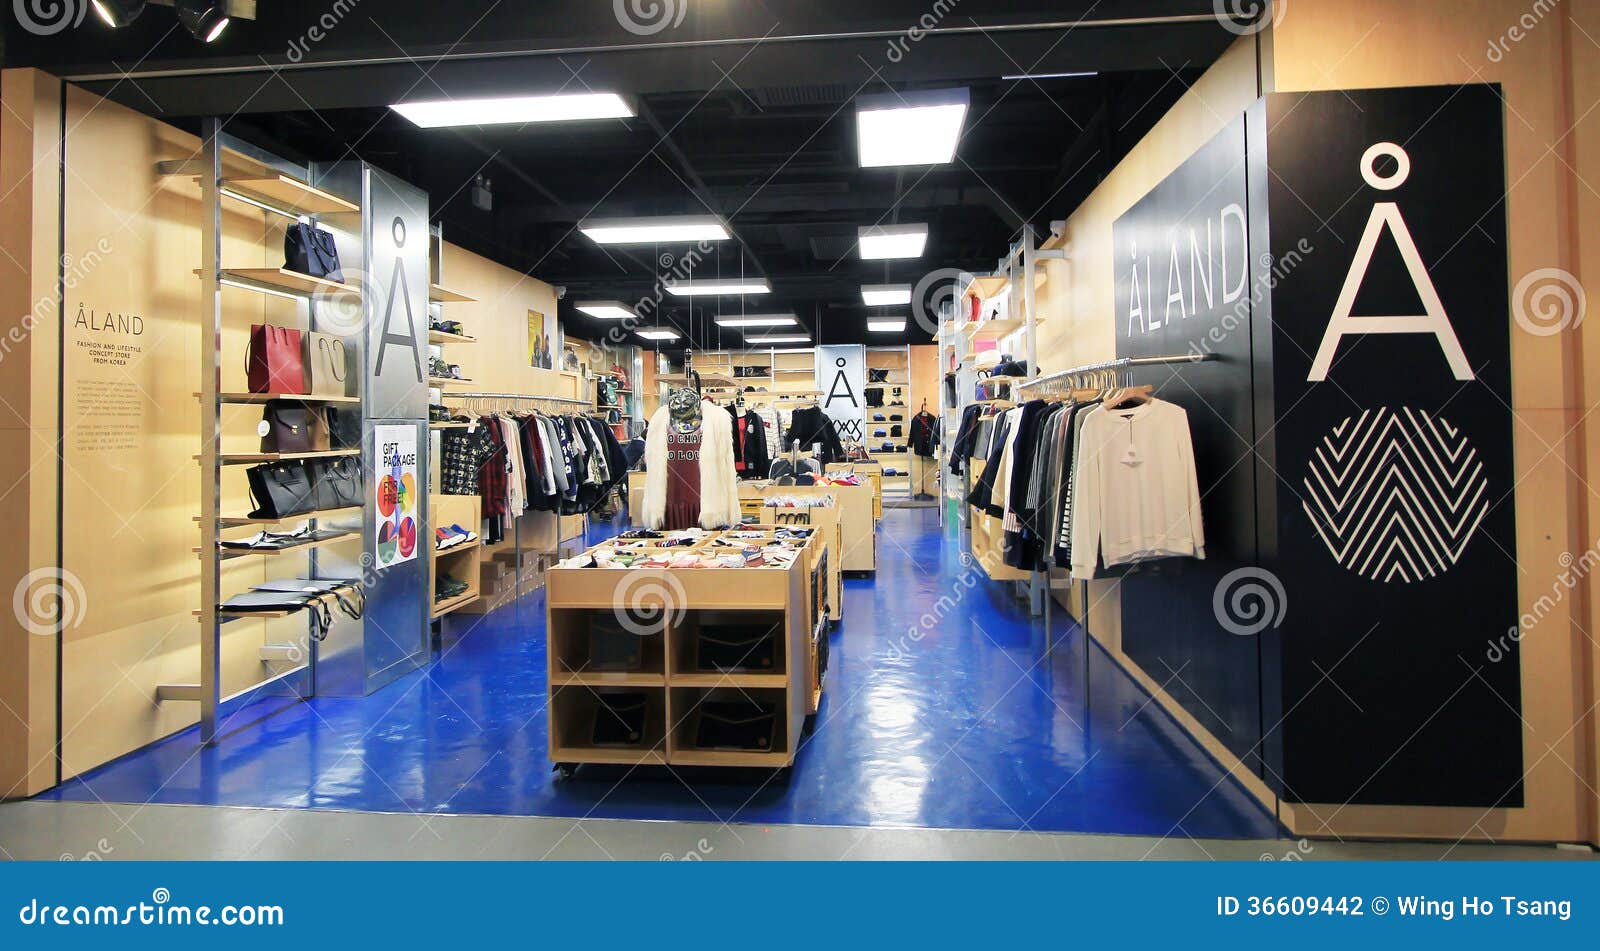 Aland Shop In Hong Kong Editorial Photography Image Of Tsui